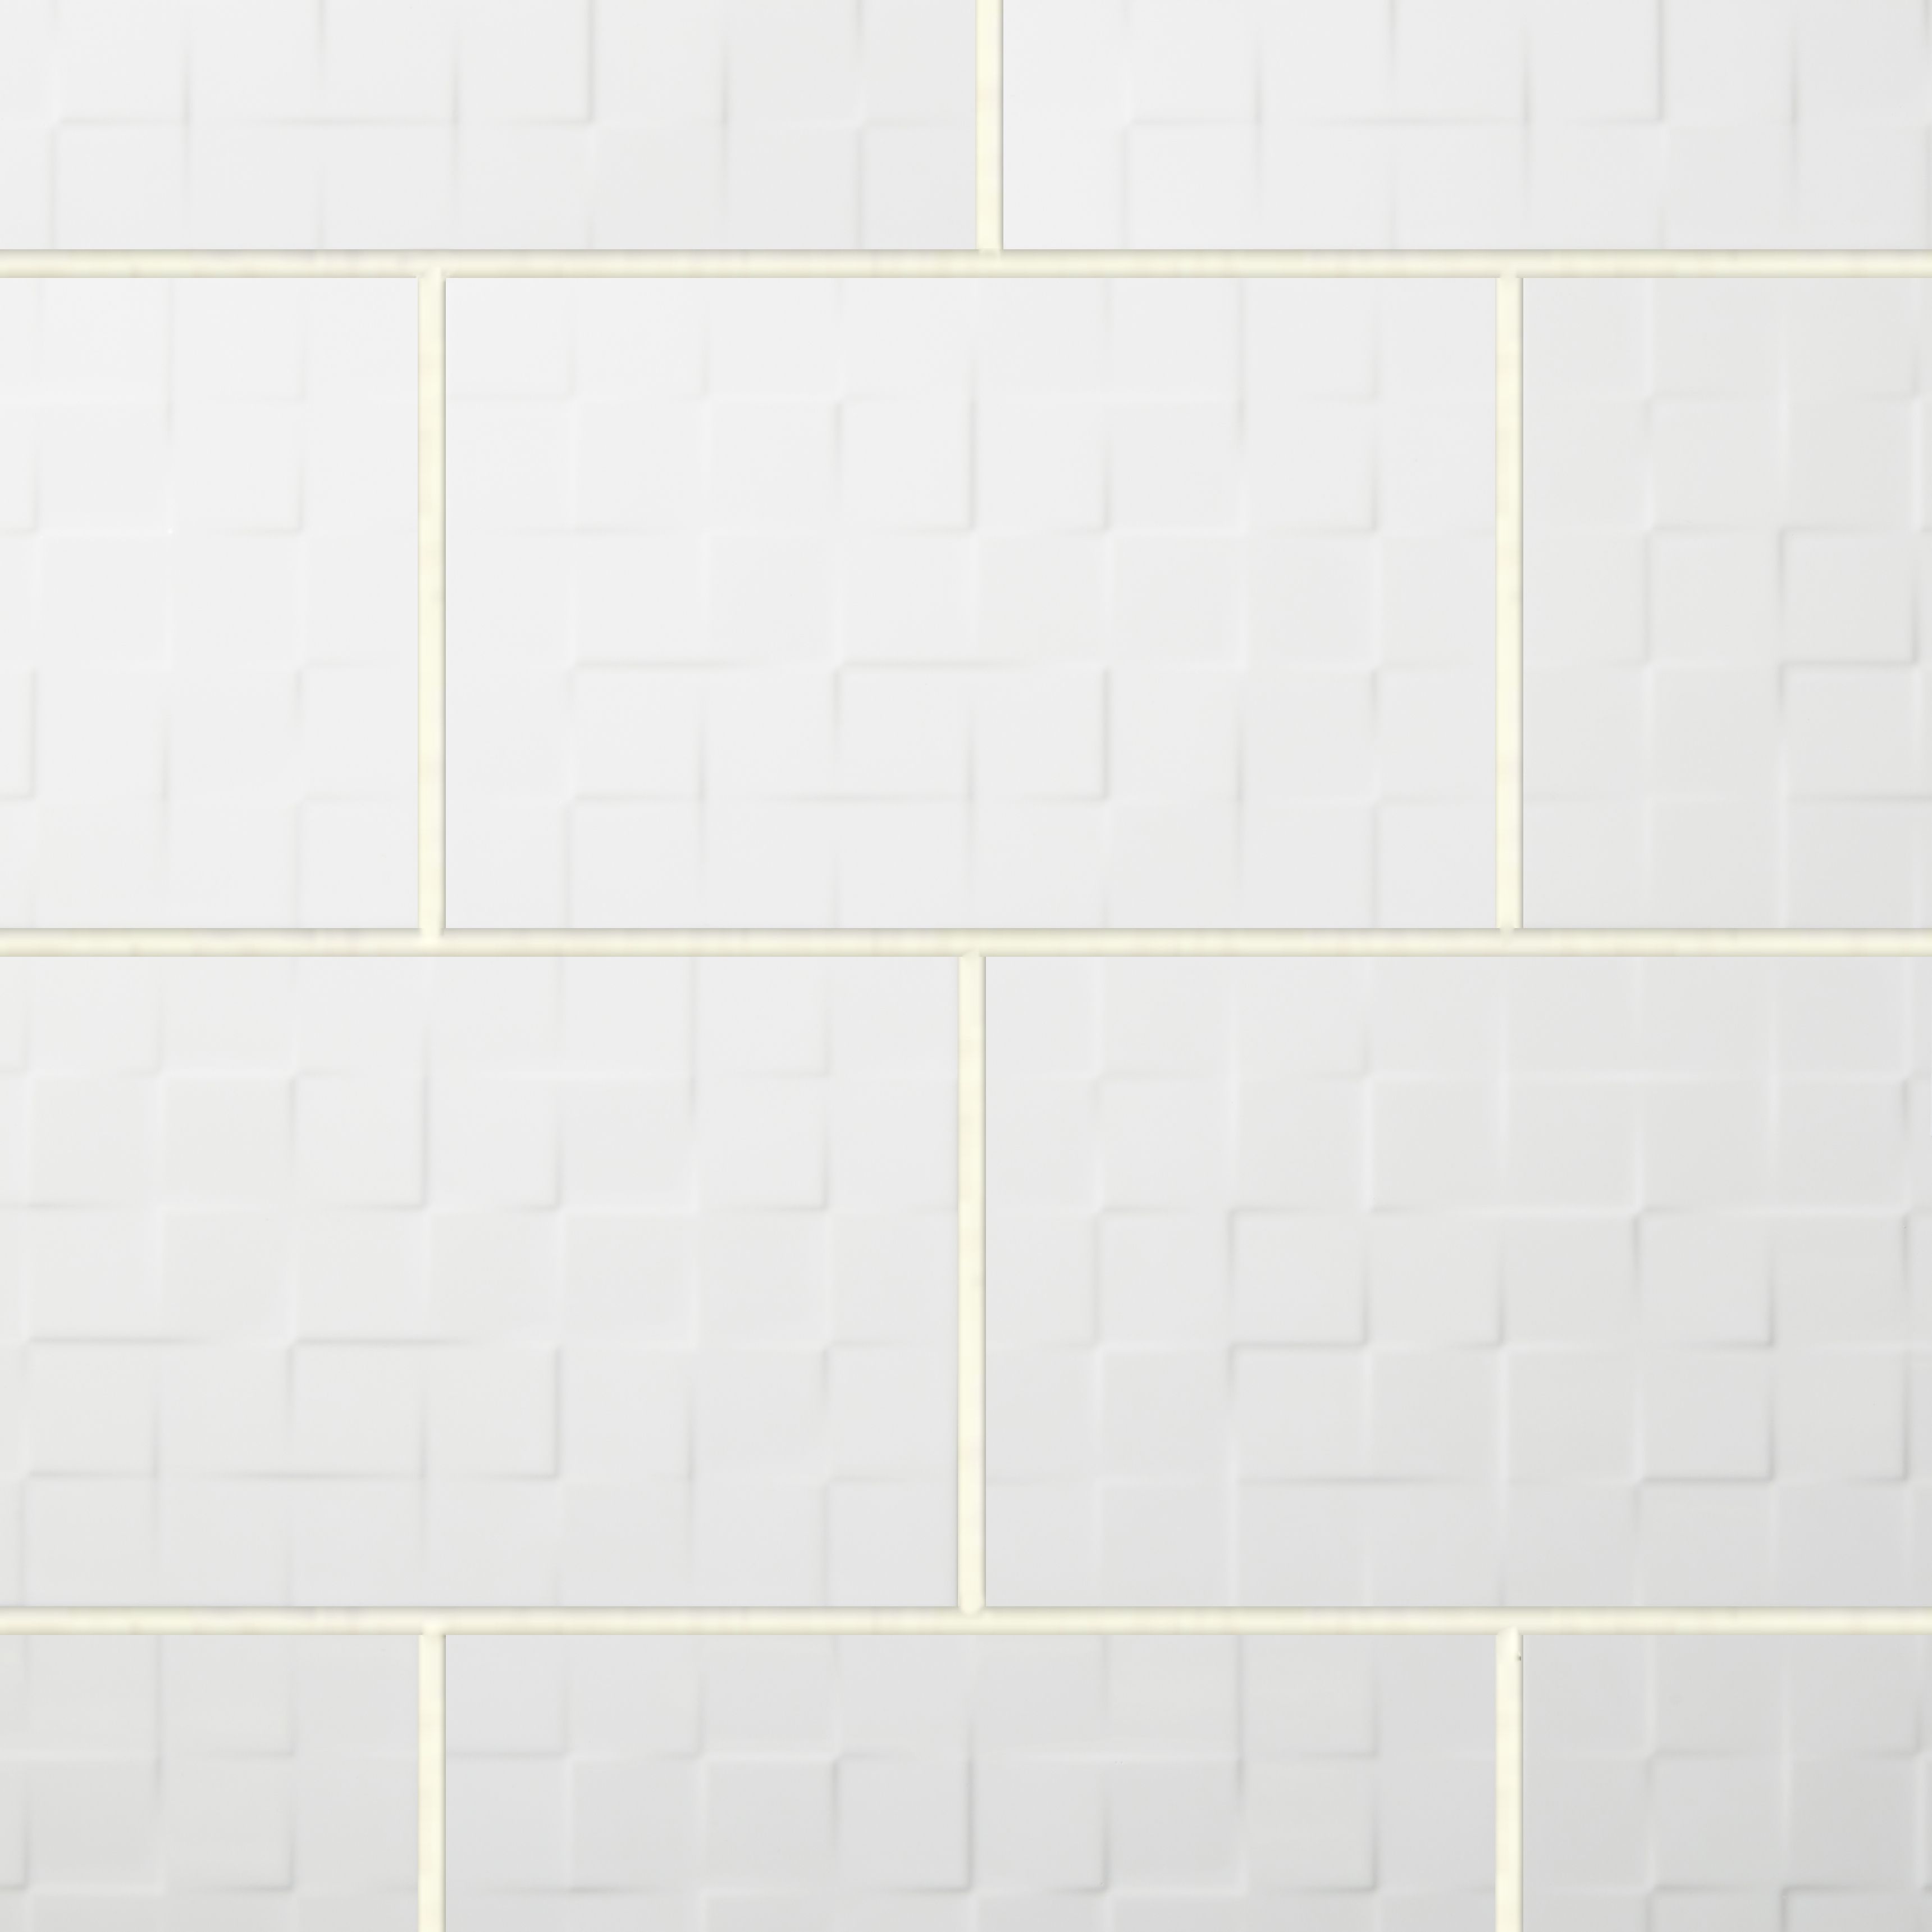 Alexandrina White Gloss Squares Ceramic Wall Tile Sample